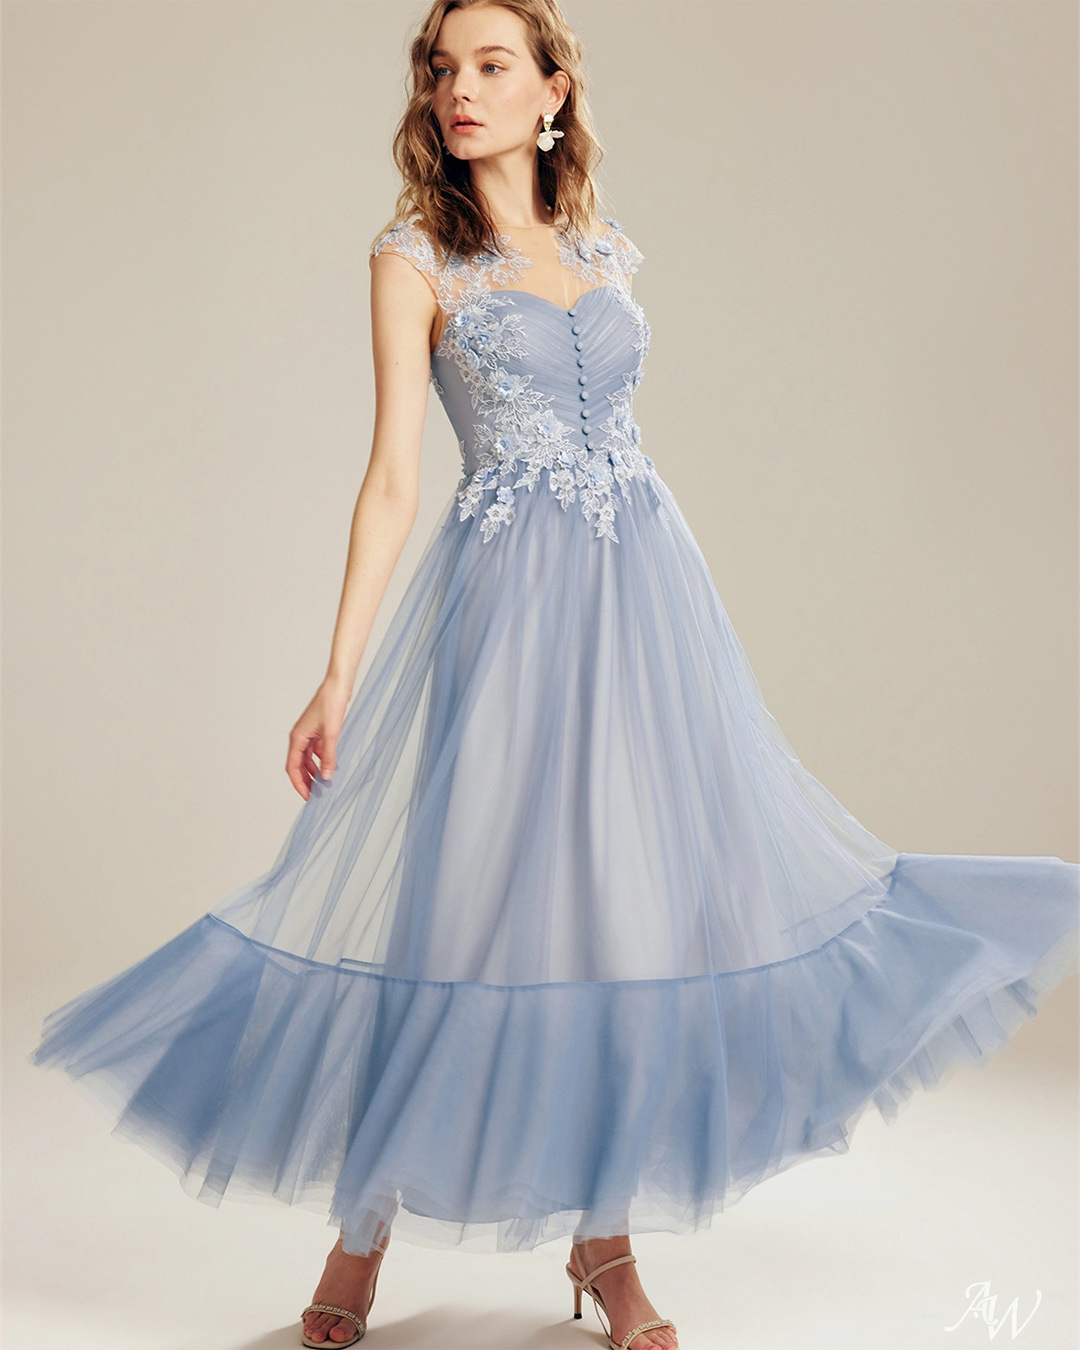 colourful wedding dresses tea length blue with white lace awbridal